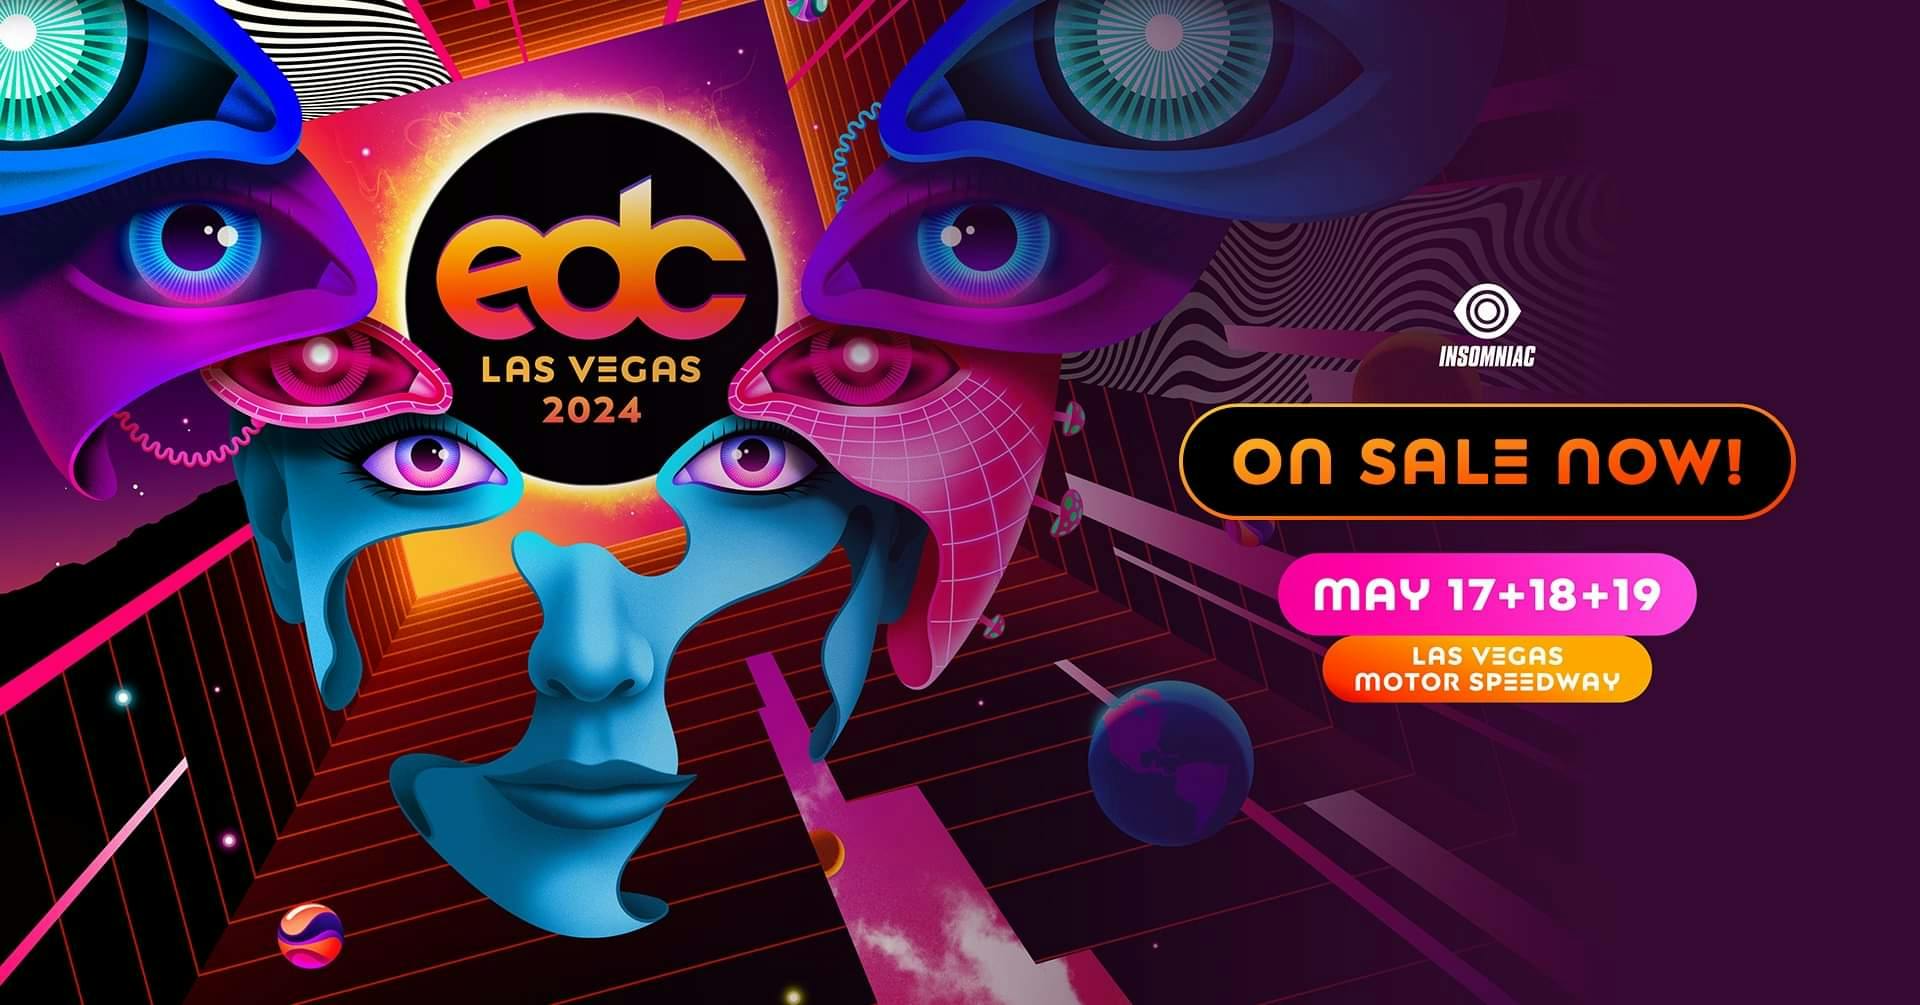 EDC Las Vegas 2024 at EDC (Electric Daisy Carnival) Friday, May 17 2024 Discotech